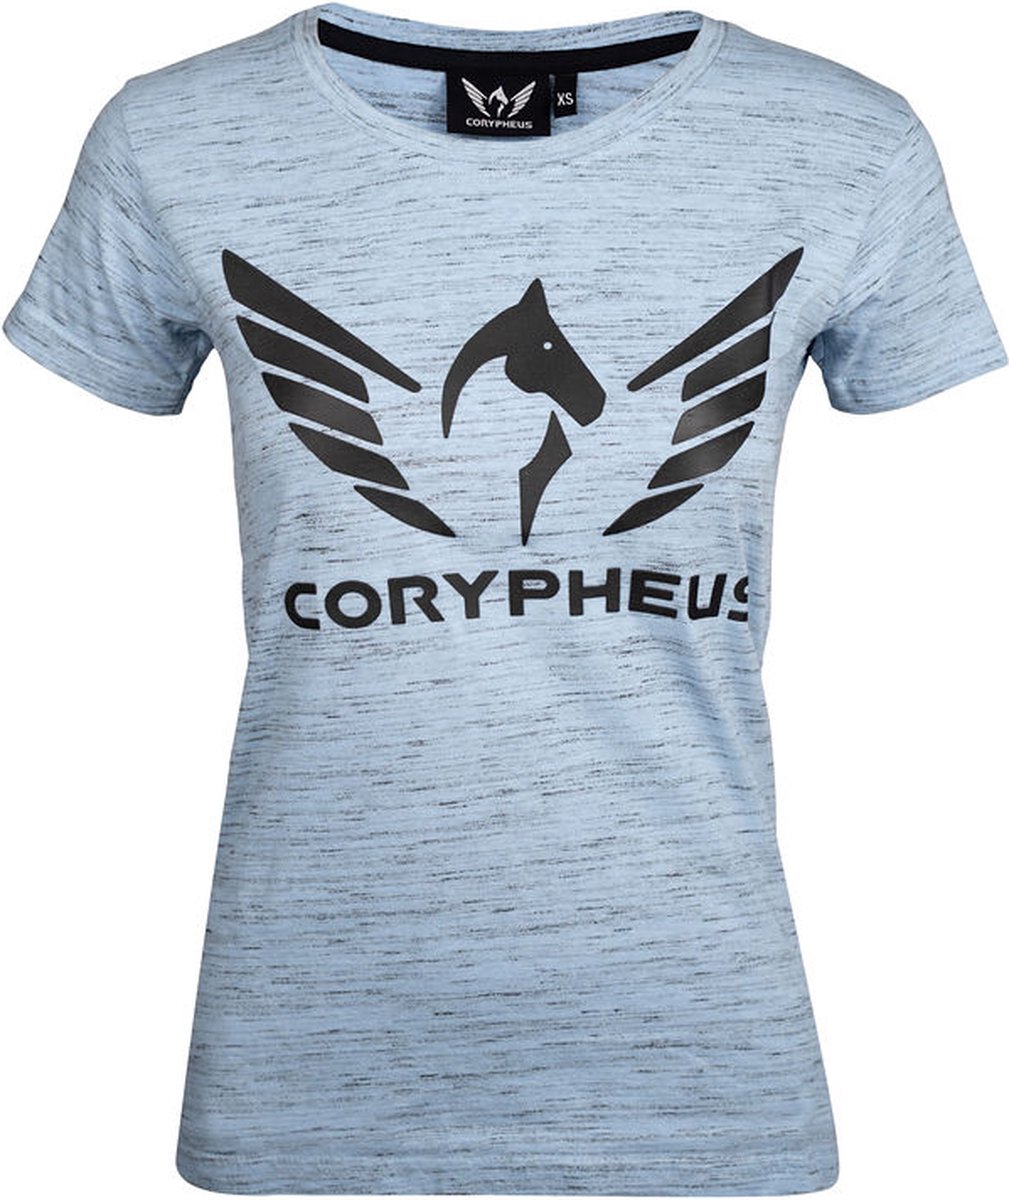 Corypheus Skyway Women's T-Shirt - Small